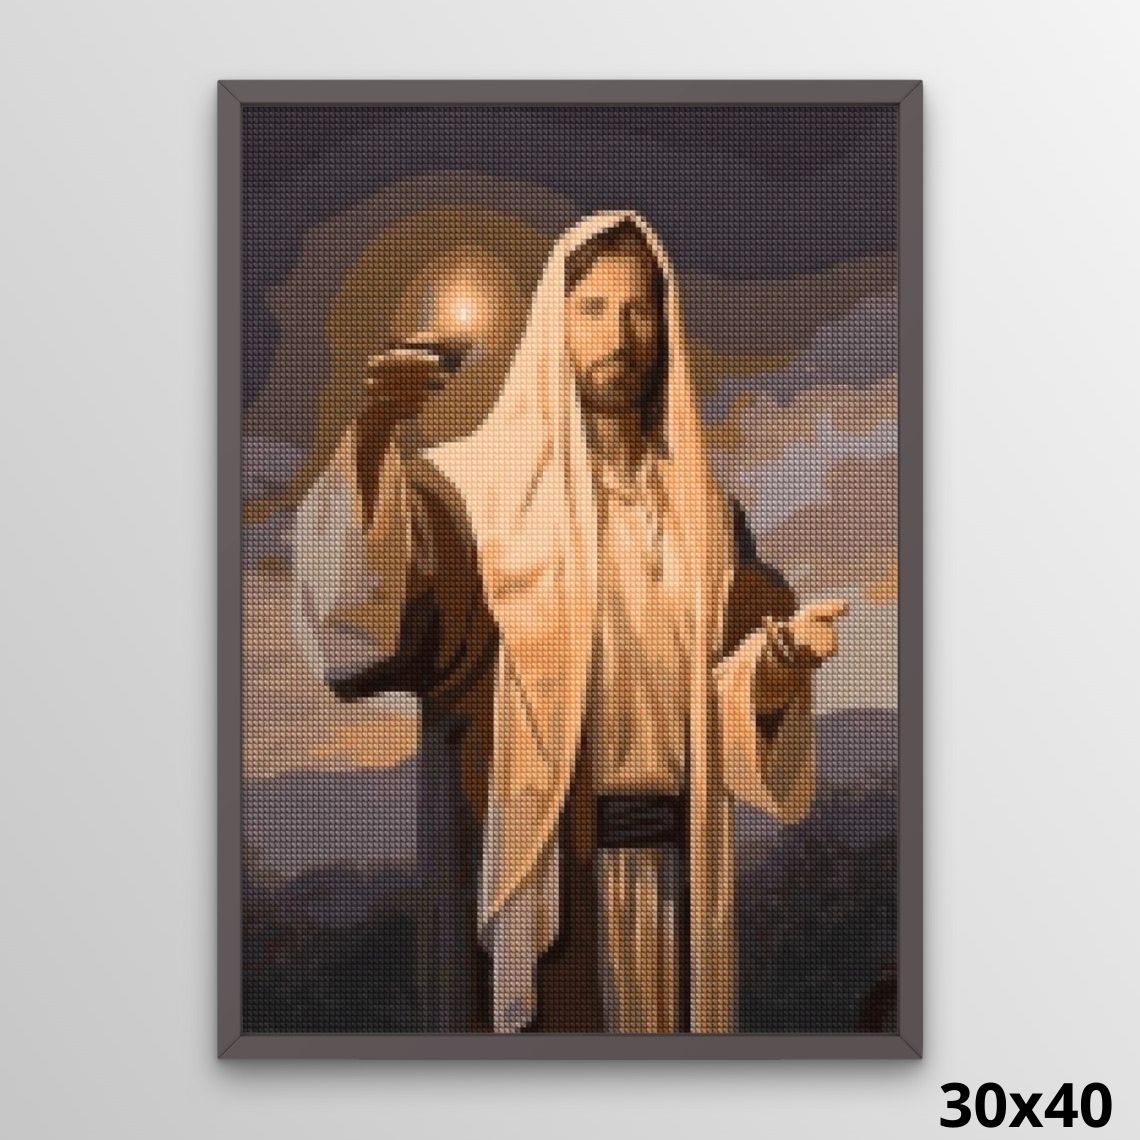 5D Diamond Painting Jesus in the Sunset Kit